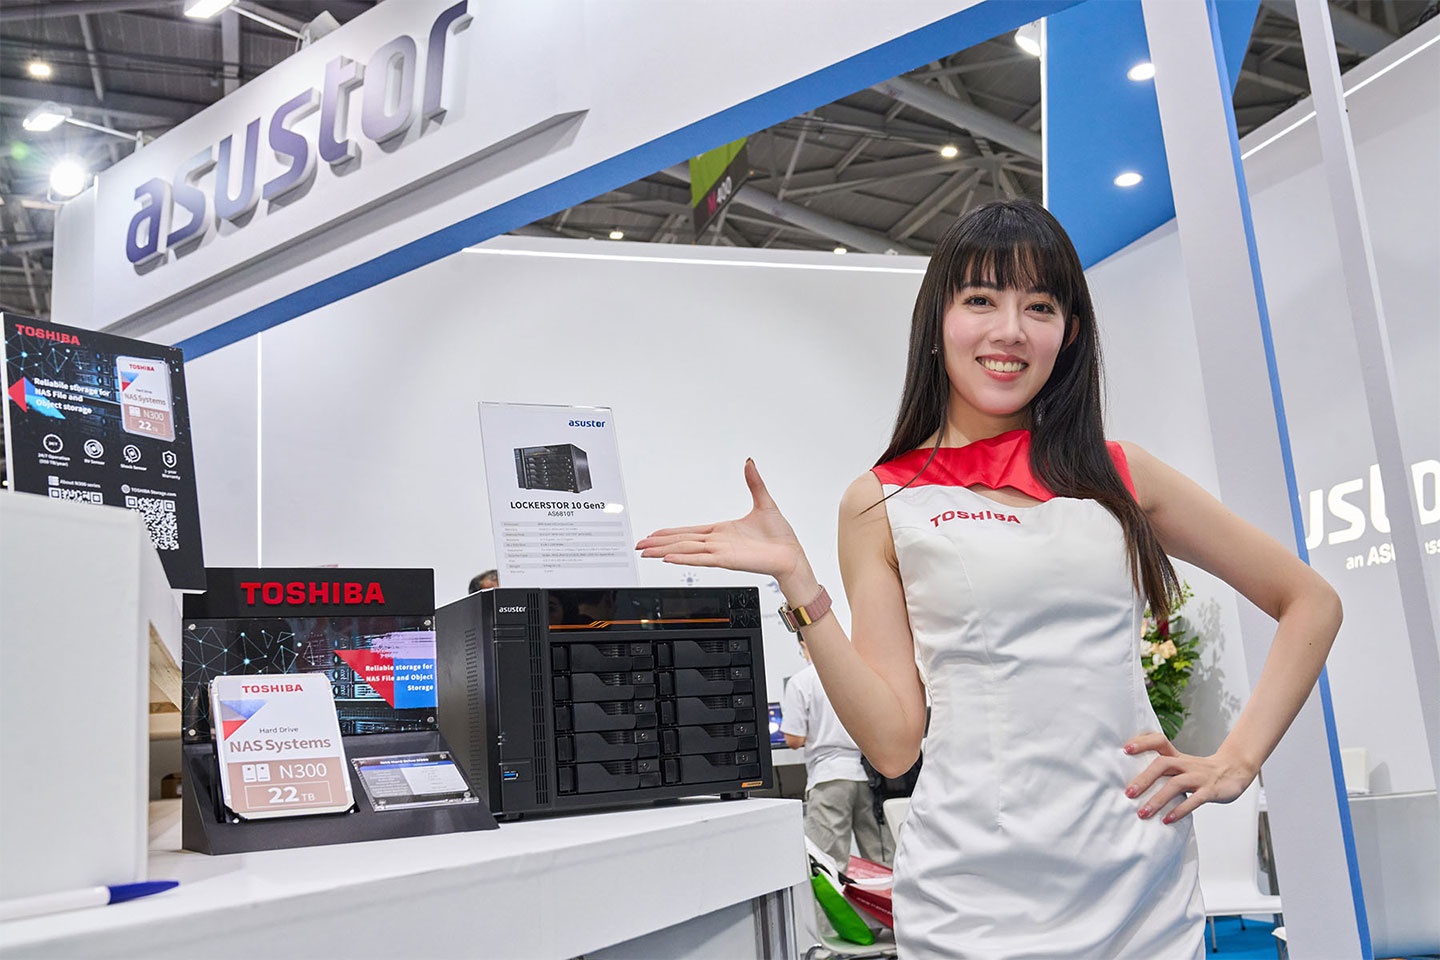 ASUSTOR 的全系列 NAS 推薦使用 Toshiba N300 系列 NAS 專用硬碟，原廠皆經過完整的相容性與穩定性測試，確保配使用能有最佳體驗。